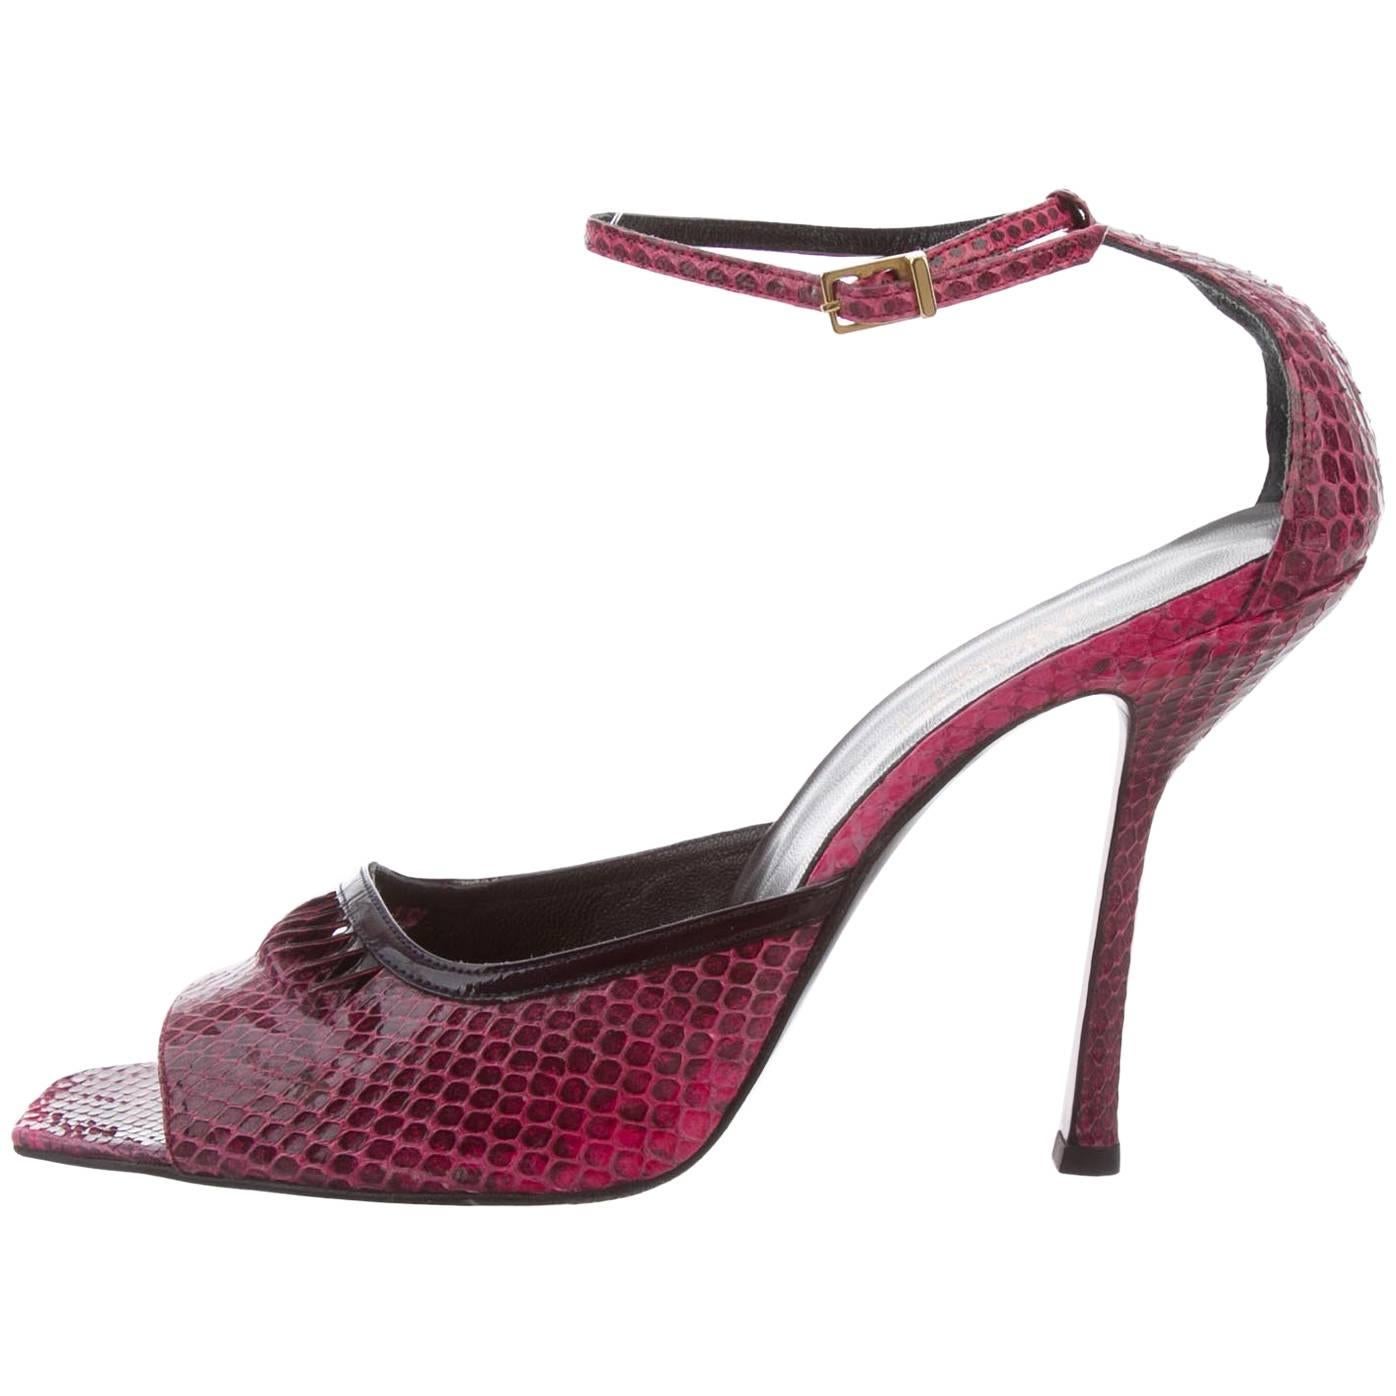 New Gianni Versace F/W 2000 Raspberry Snakeskin Peep-toe Shoes Sandals 39.5  9.5